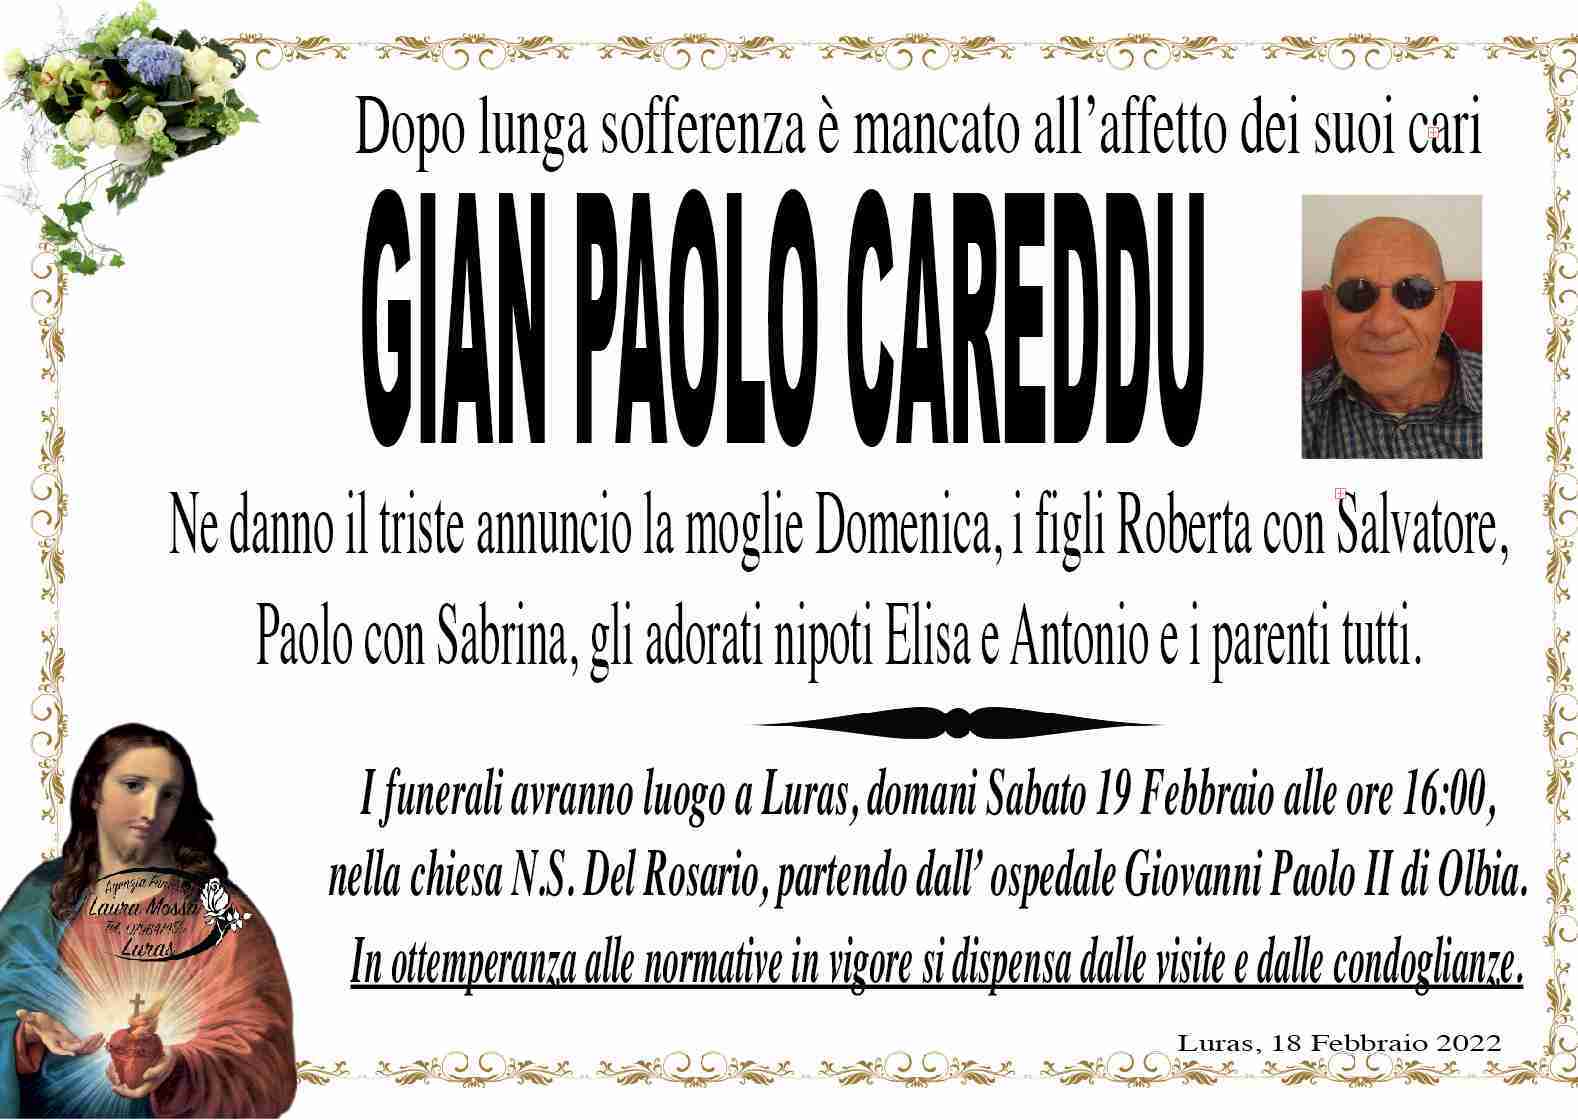 Gian Paolo Careddu